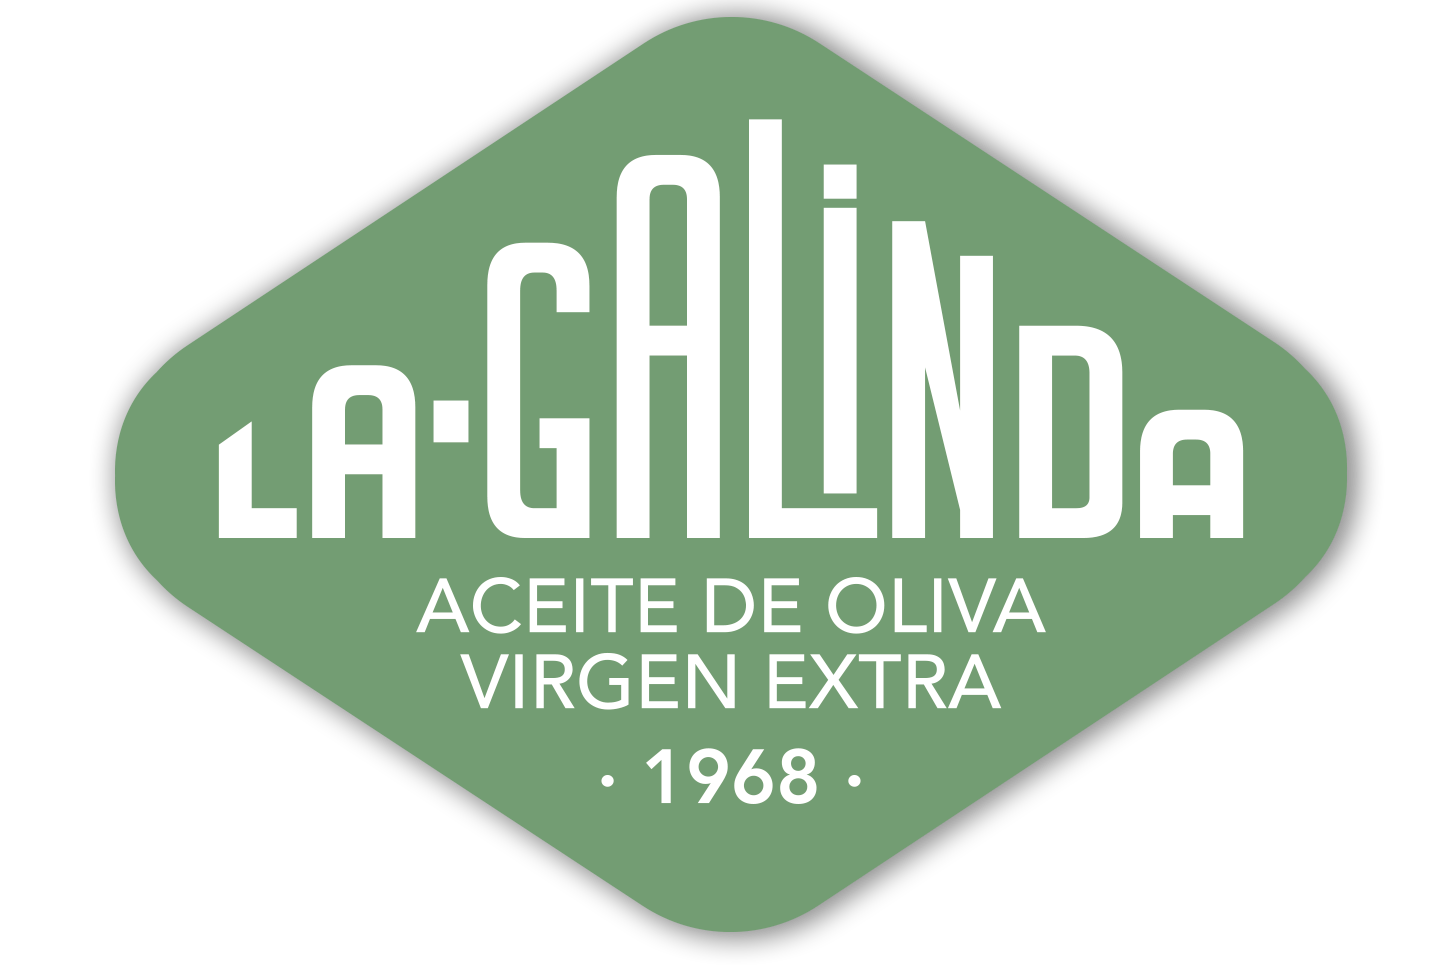 La Galinda